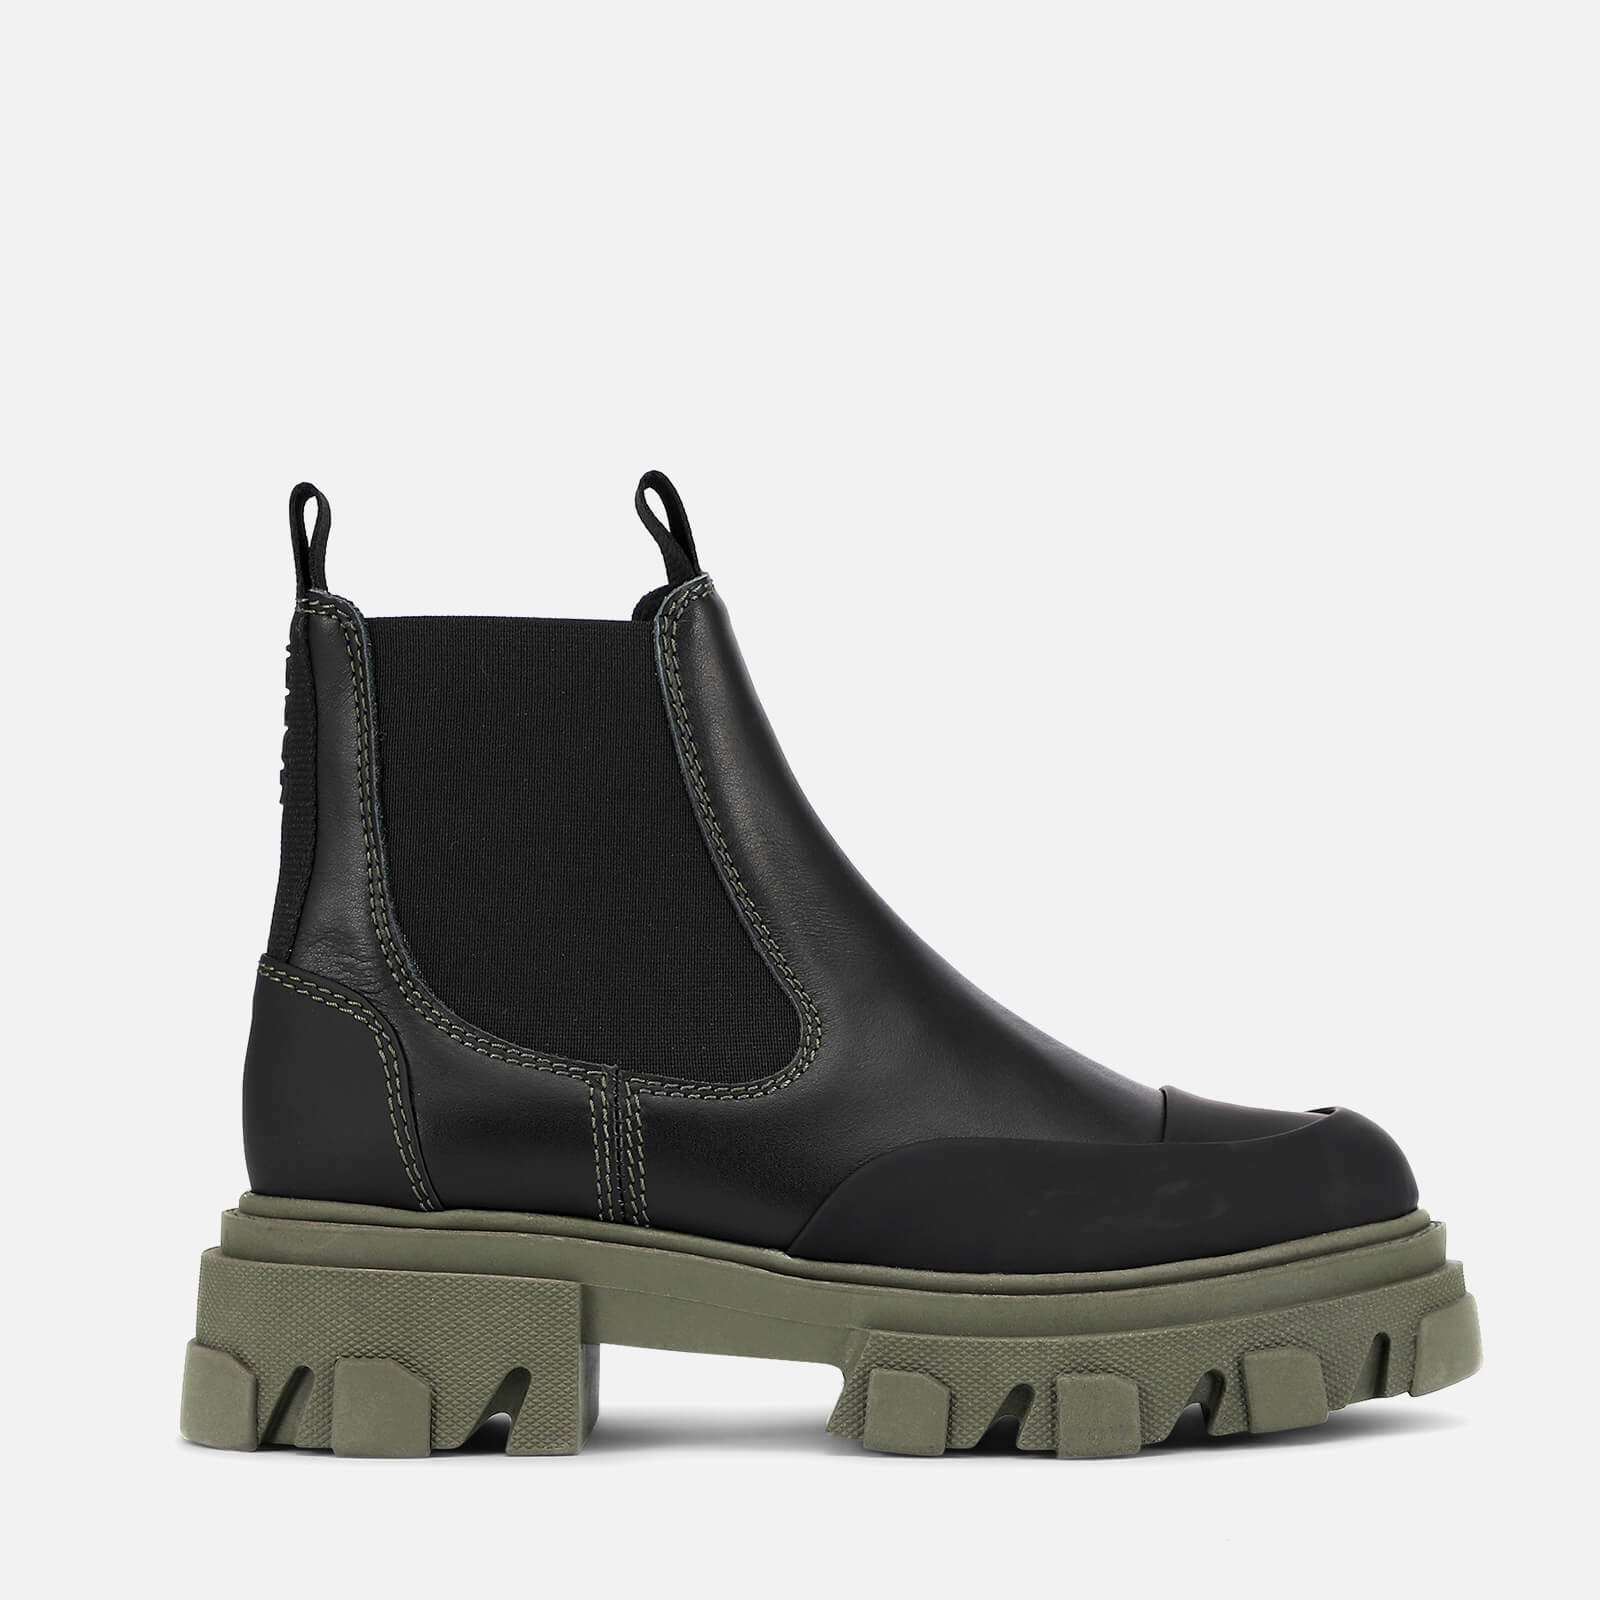 Ganni Women's Leather Chelsea Boots - Black/Green - UK 3